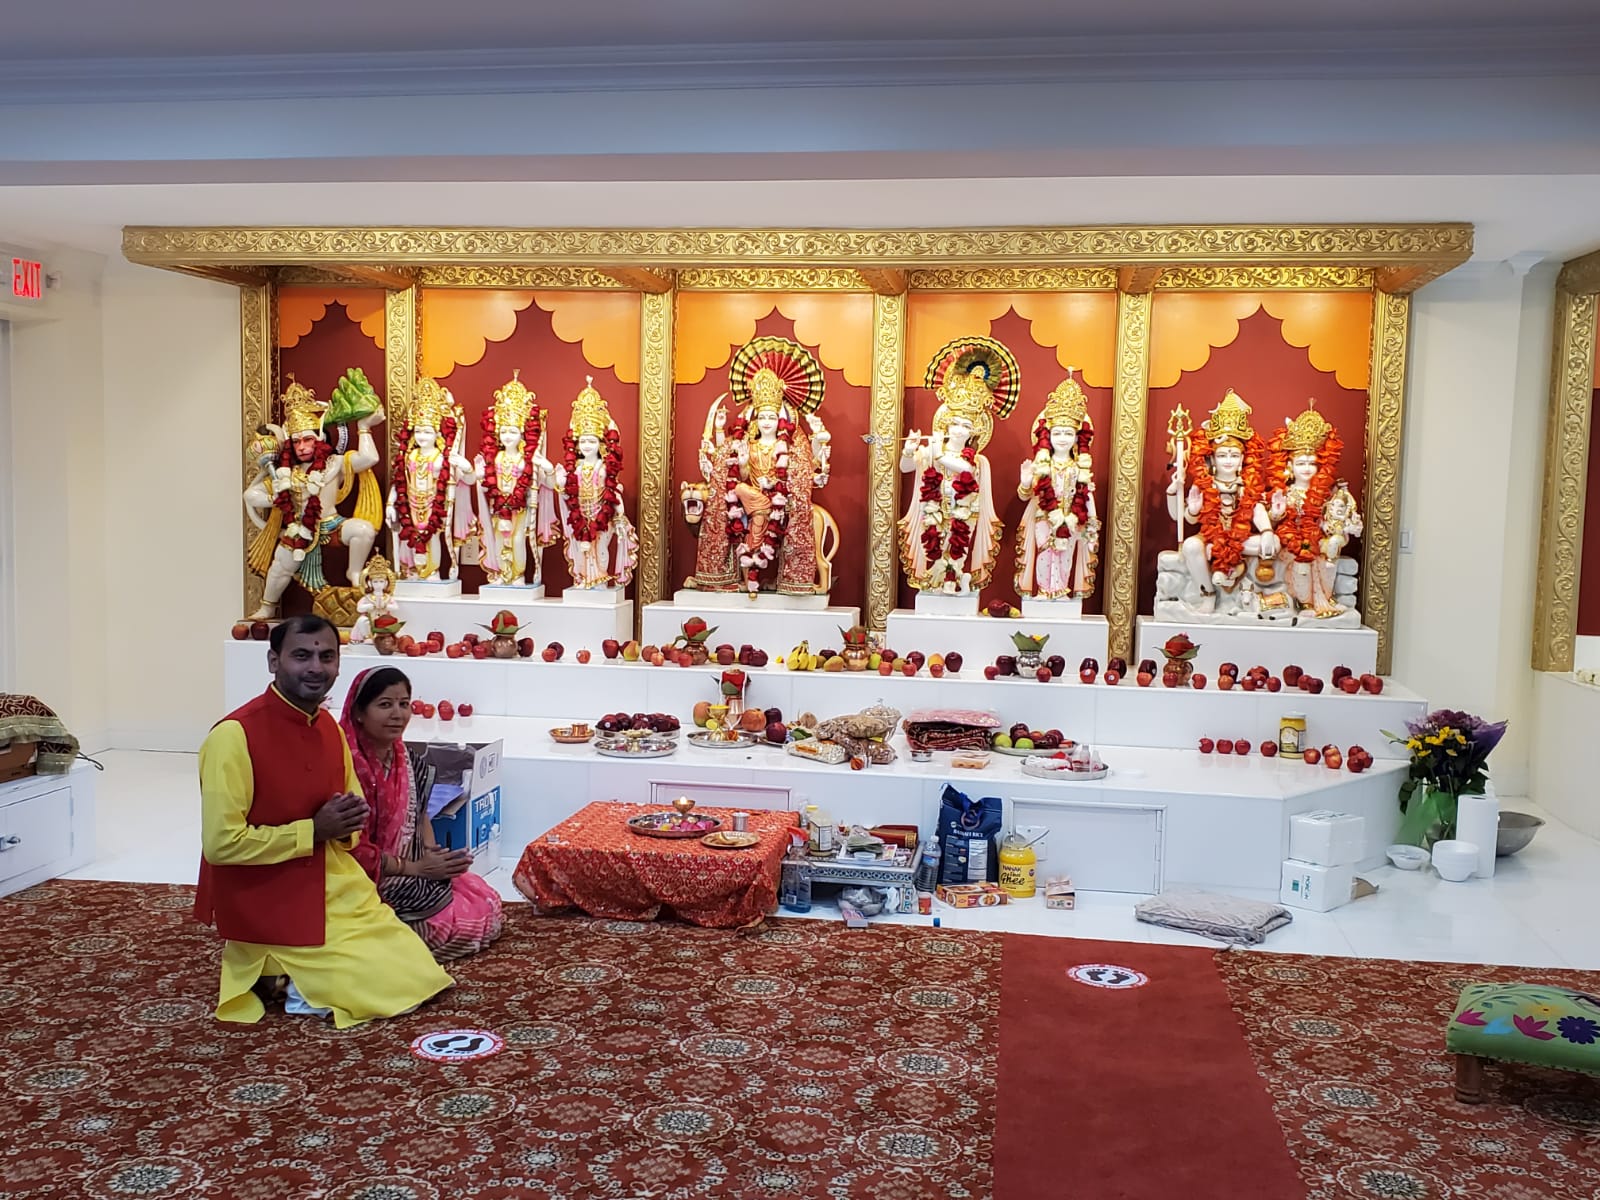 Pandit Harish Sharma at mandir with hindu deities